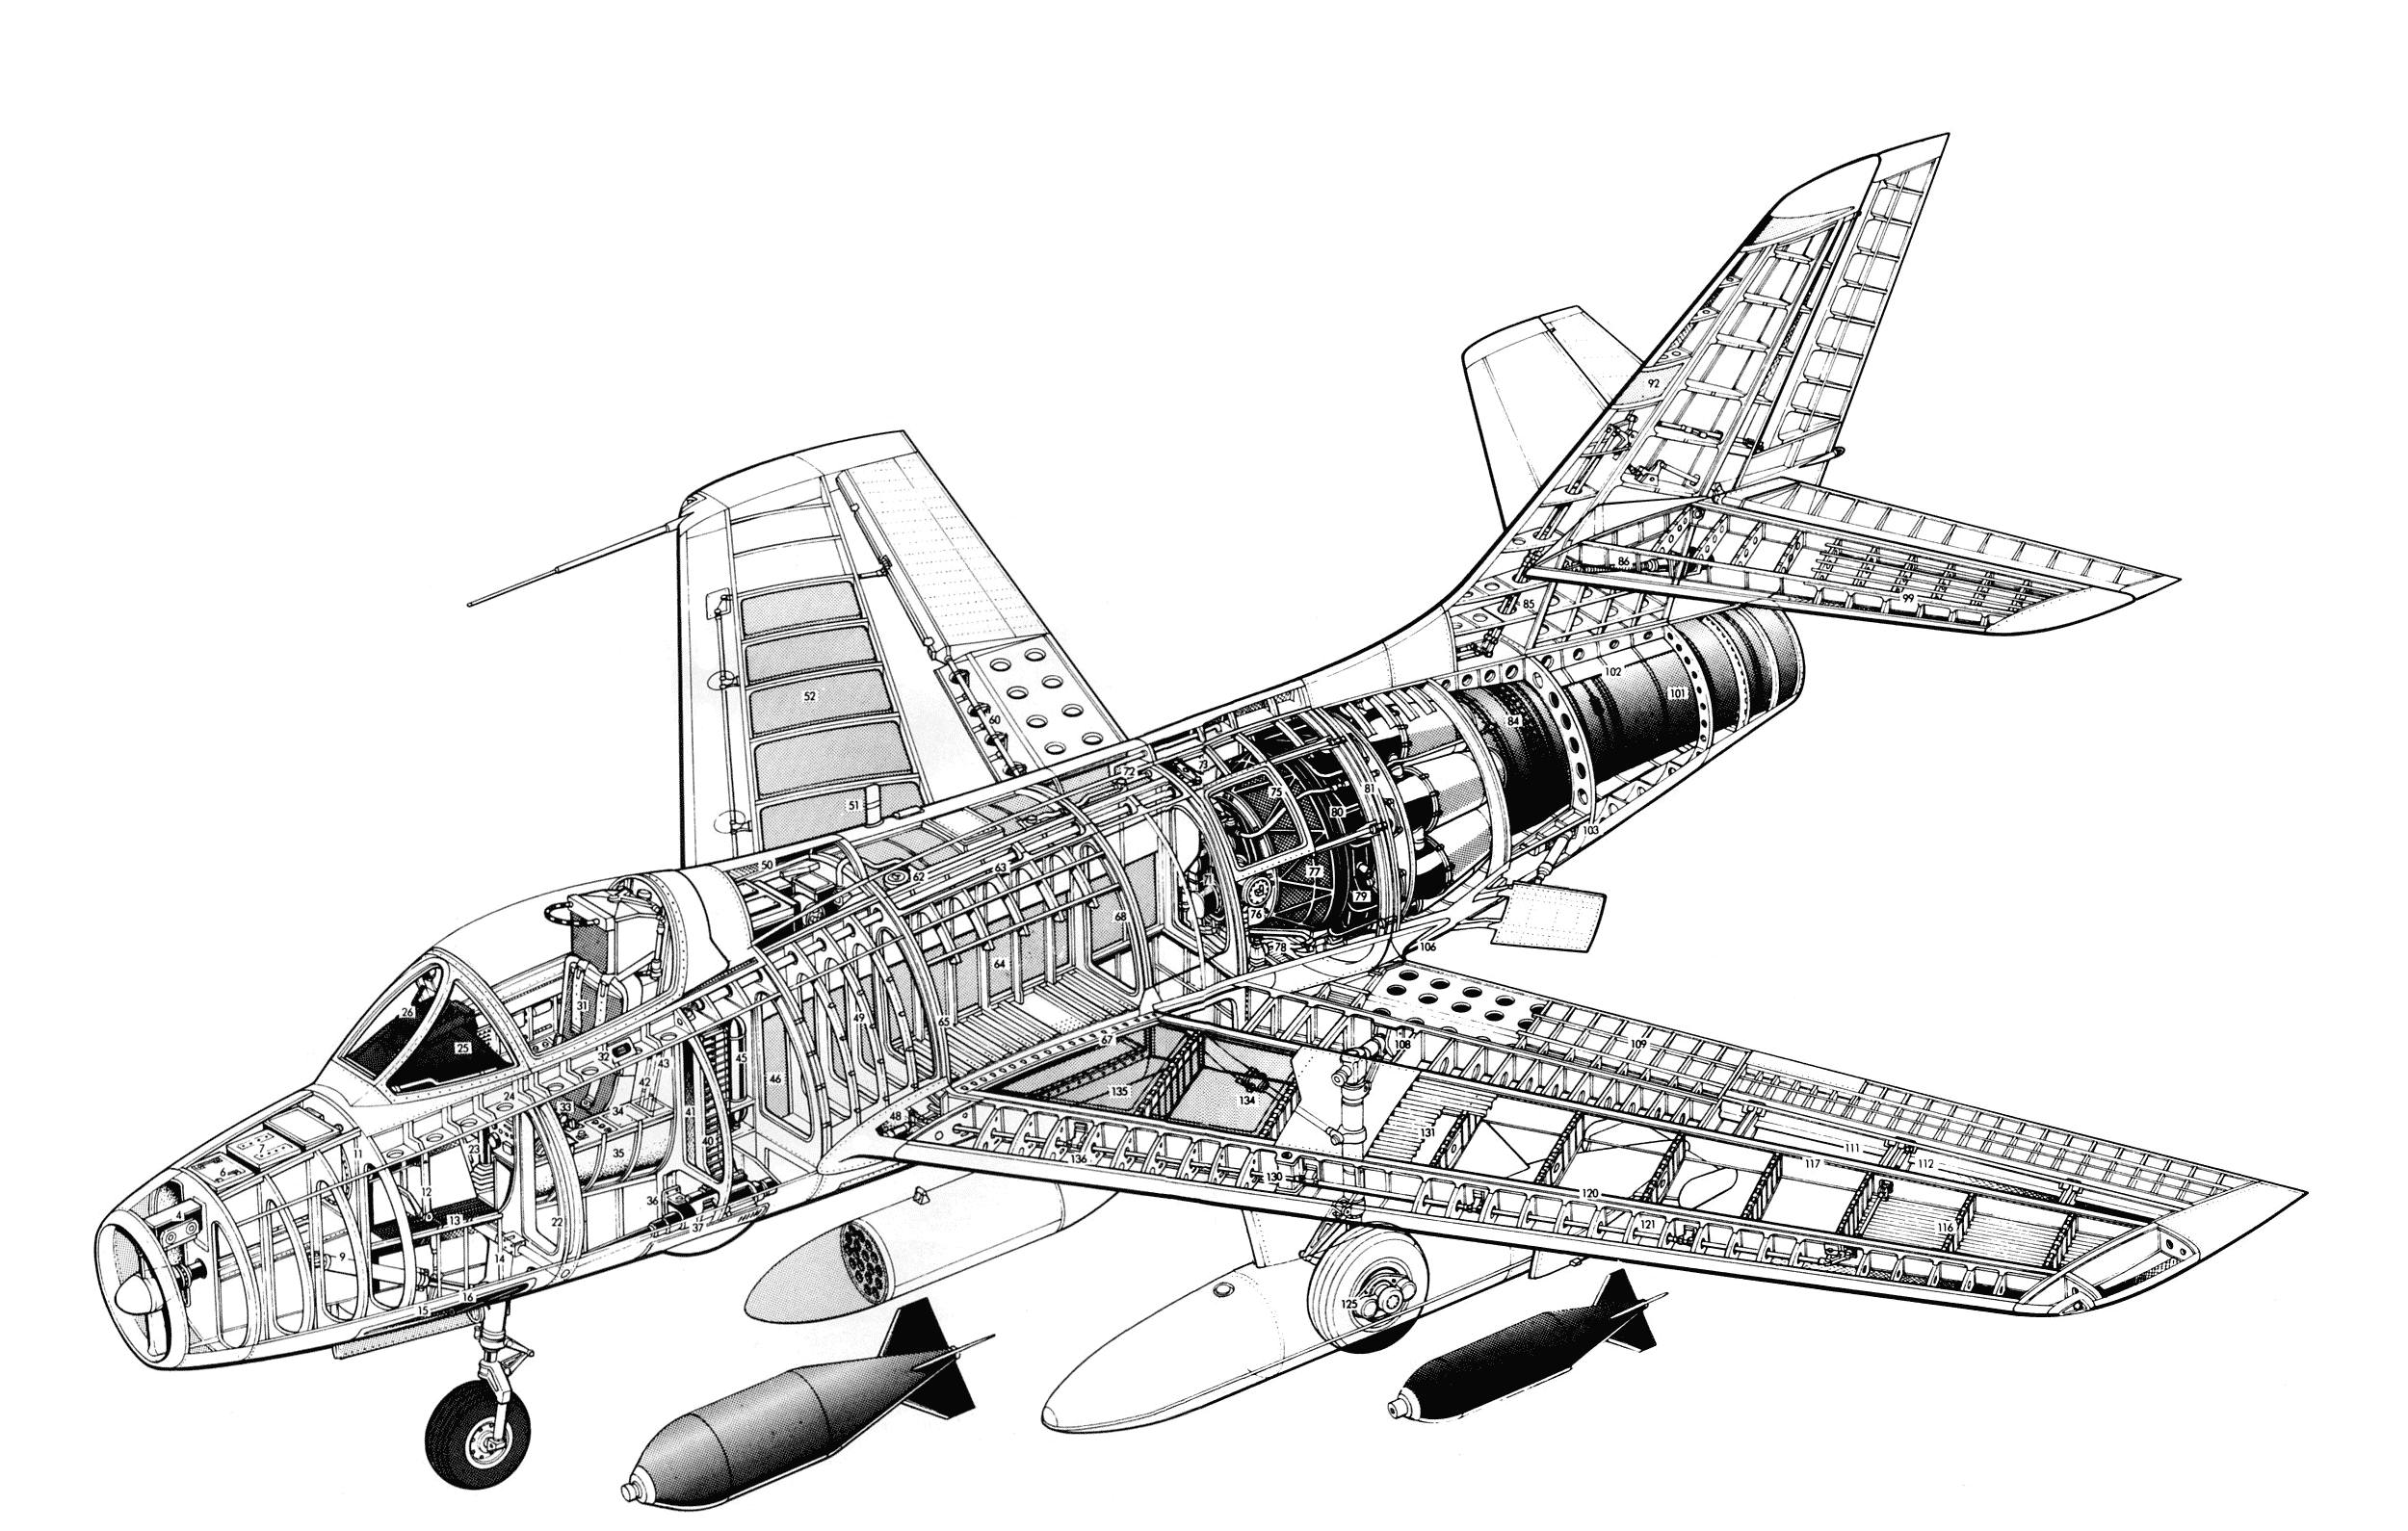 Dassault Mystère IV cutaway